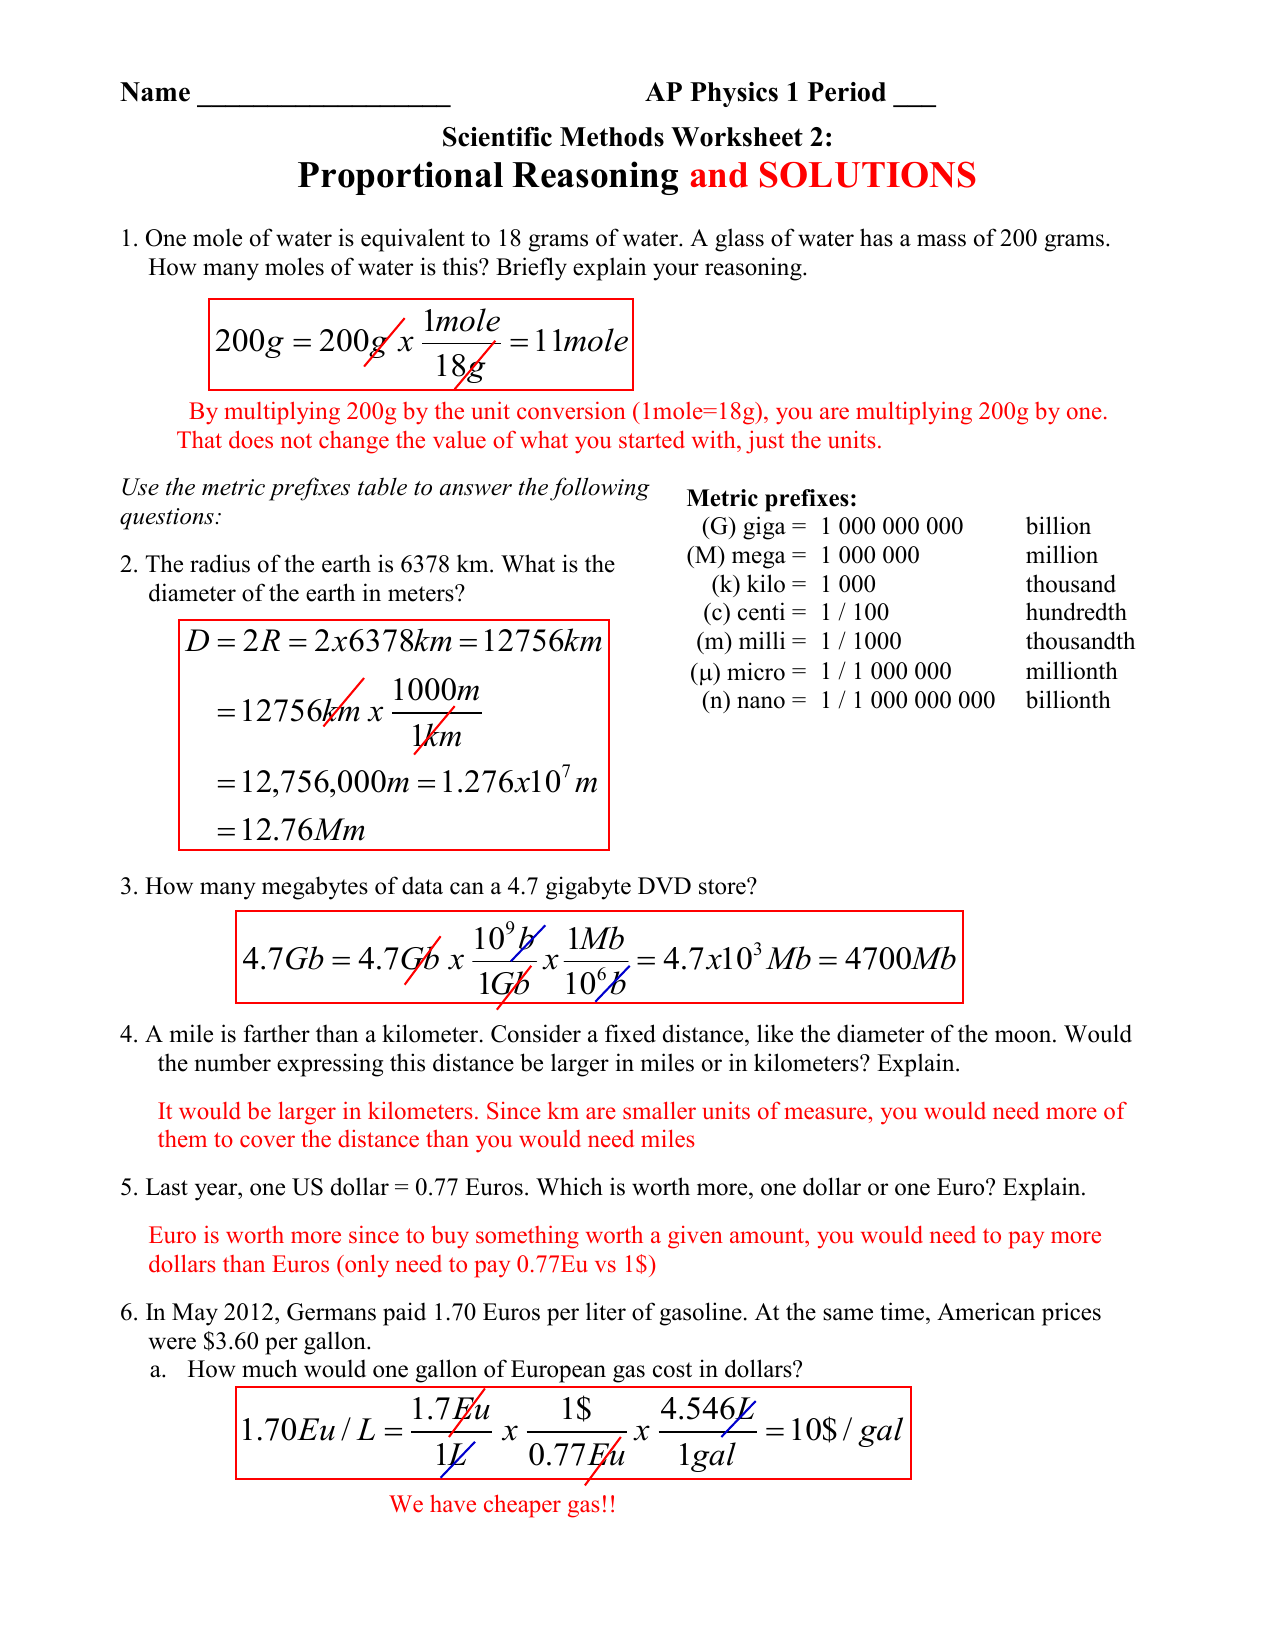 Scientific Methods Worksheet 25: With Regard To Scientific Method Worksheet Answer Key